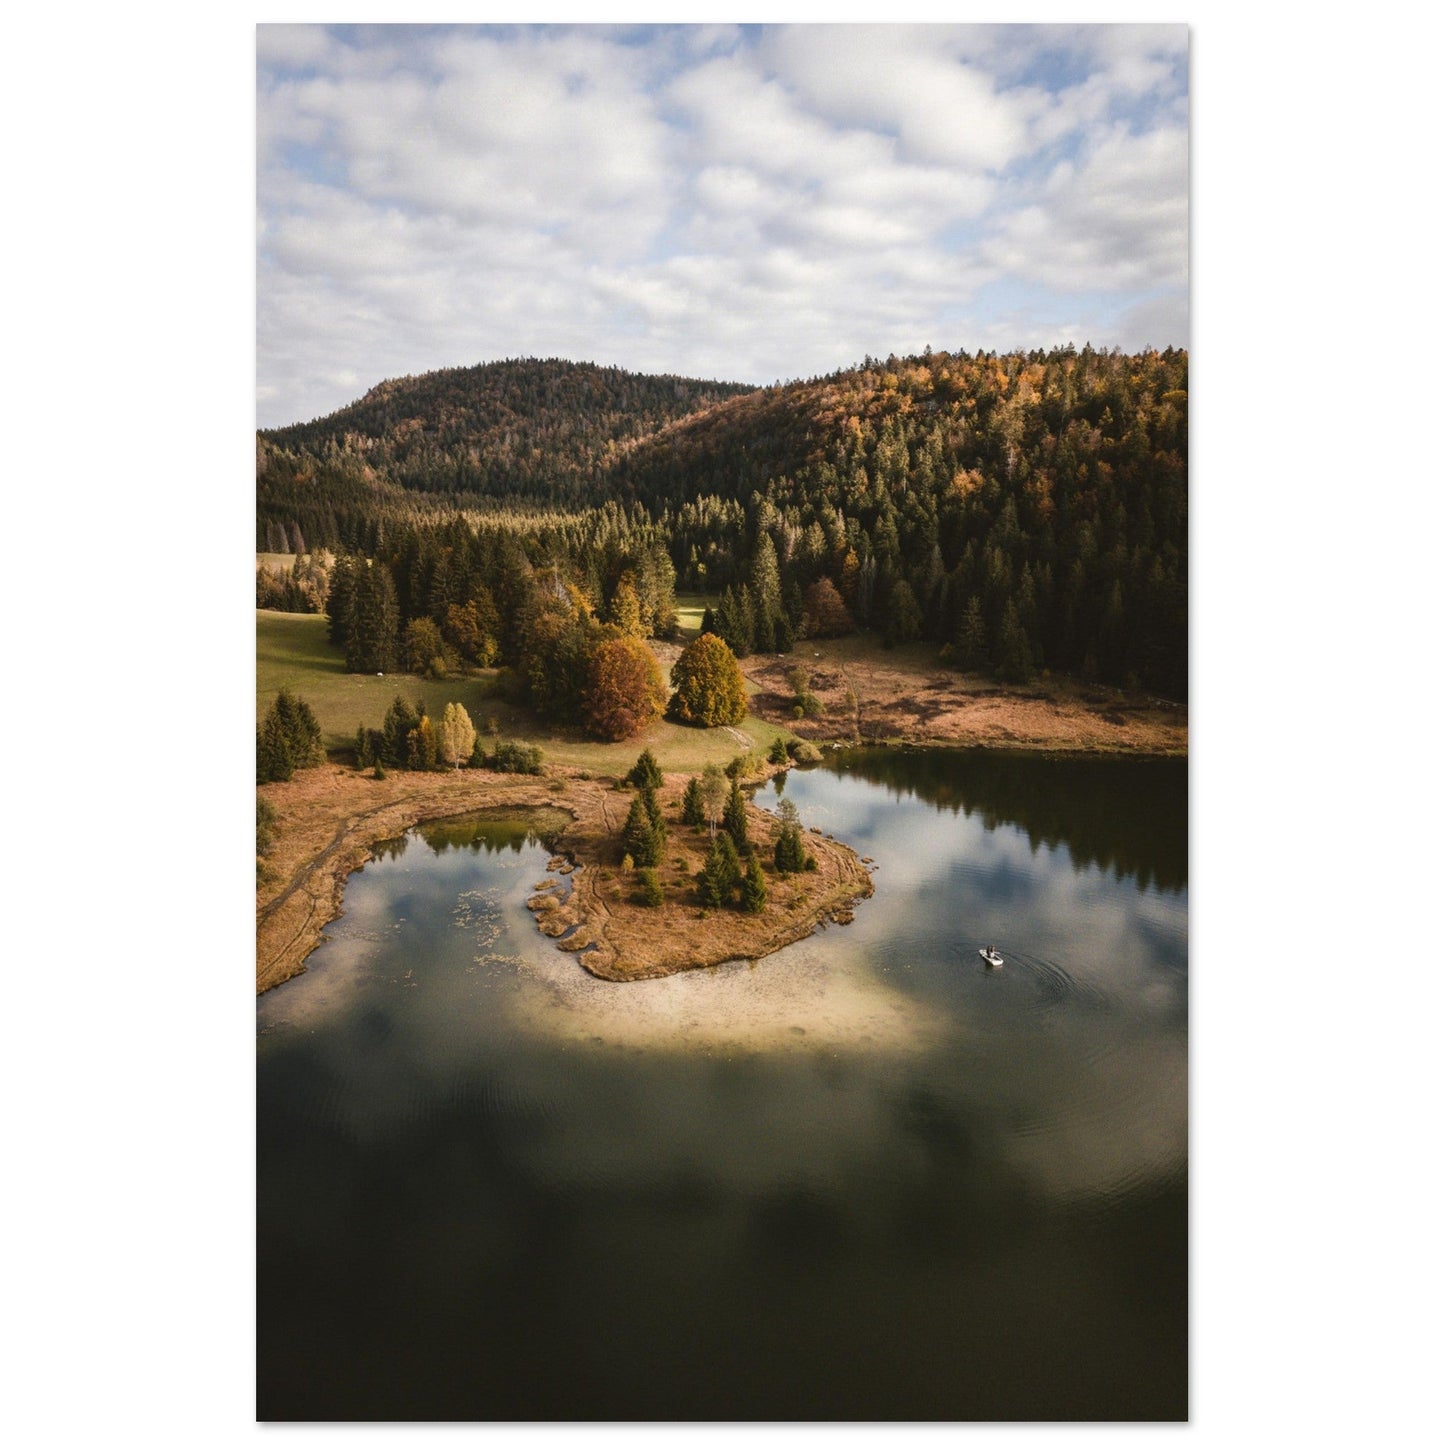 Vente Photo du lac Genin en automne, Jura #1 - Tableau photo alu montagne